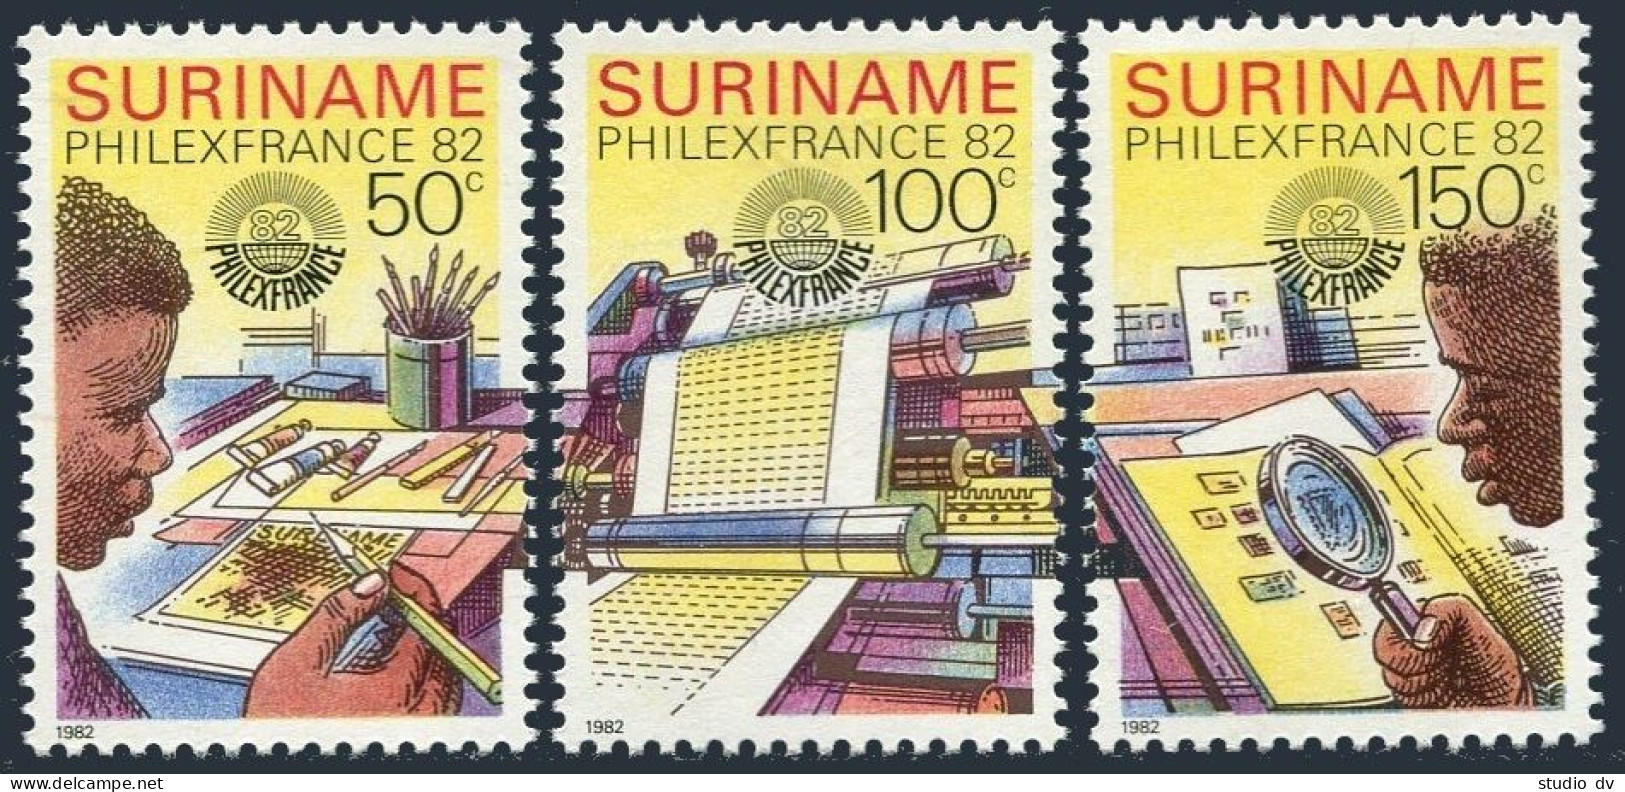 Surinam 600-602, MNH. Mi 987-989. PHILEXFRANCE-1982. Stamps Designing, Printing, - Suriname